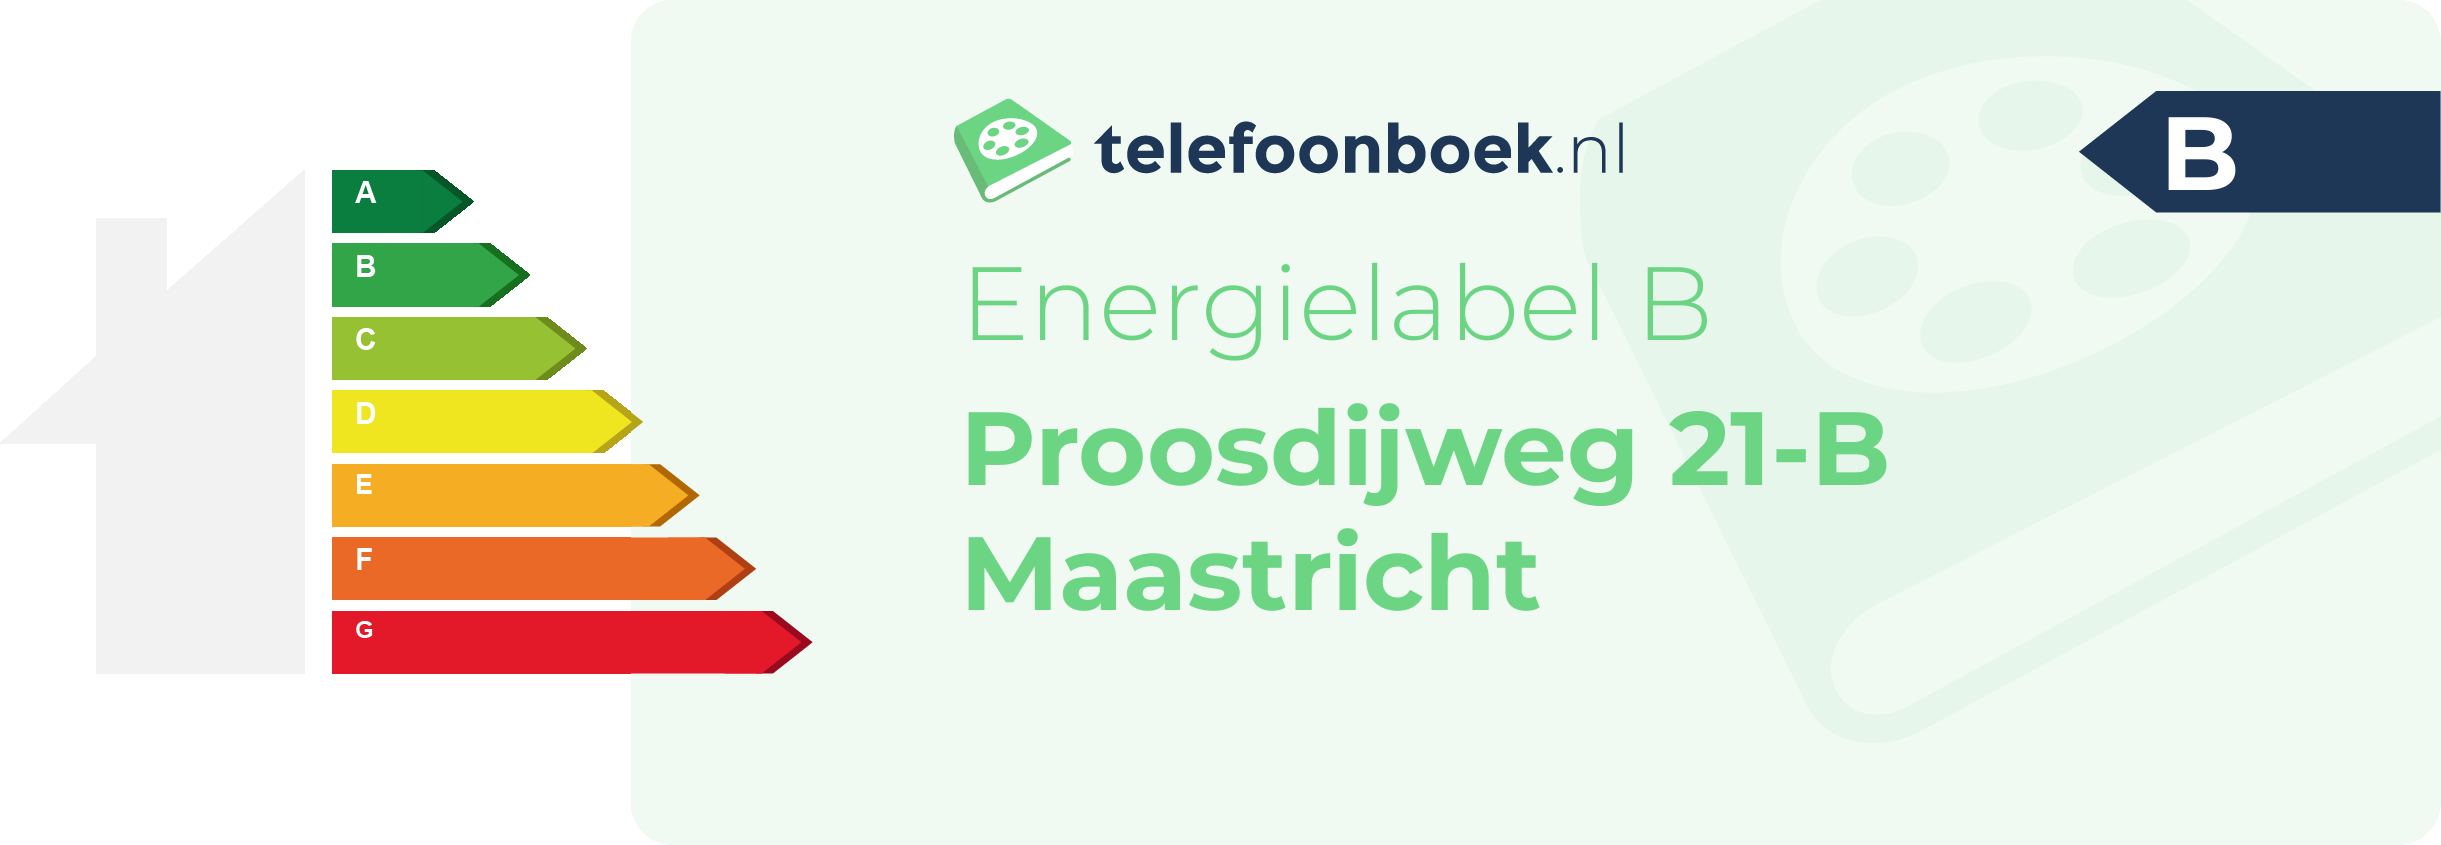 Energielabel Proosdijweg 21-B Maastricht